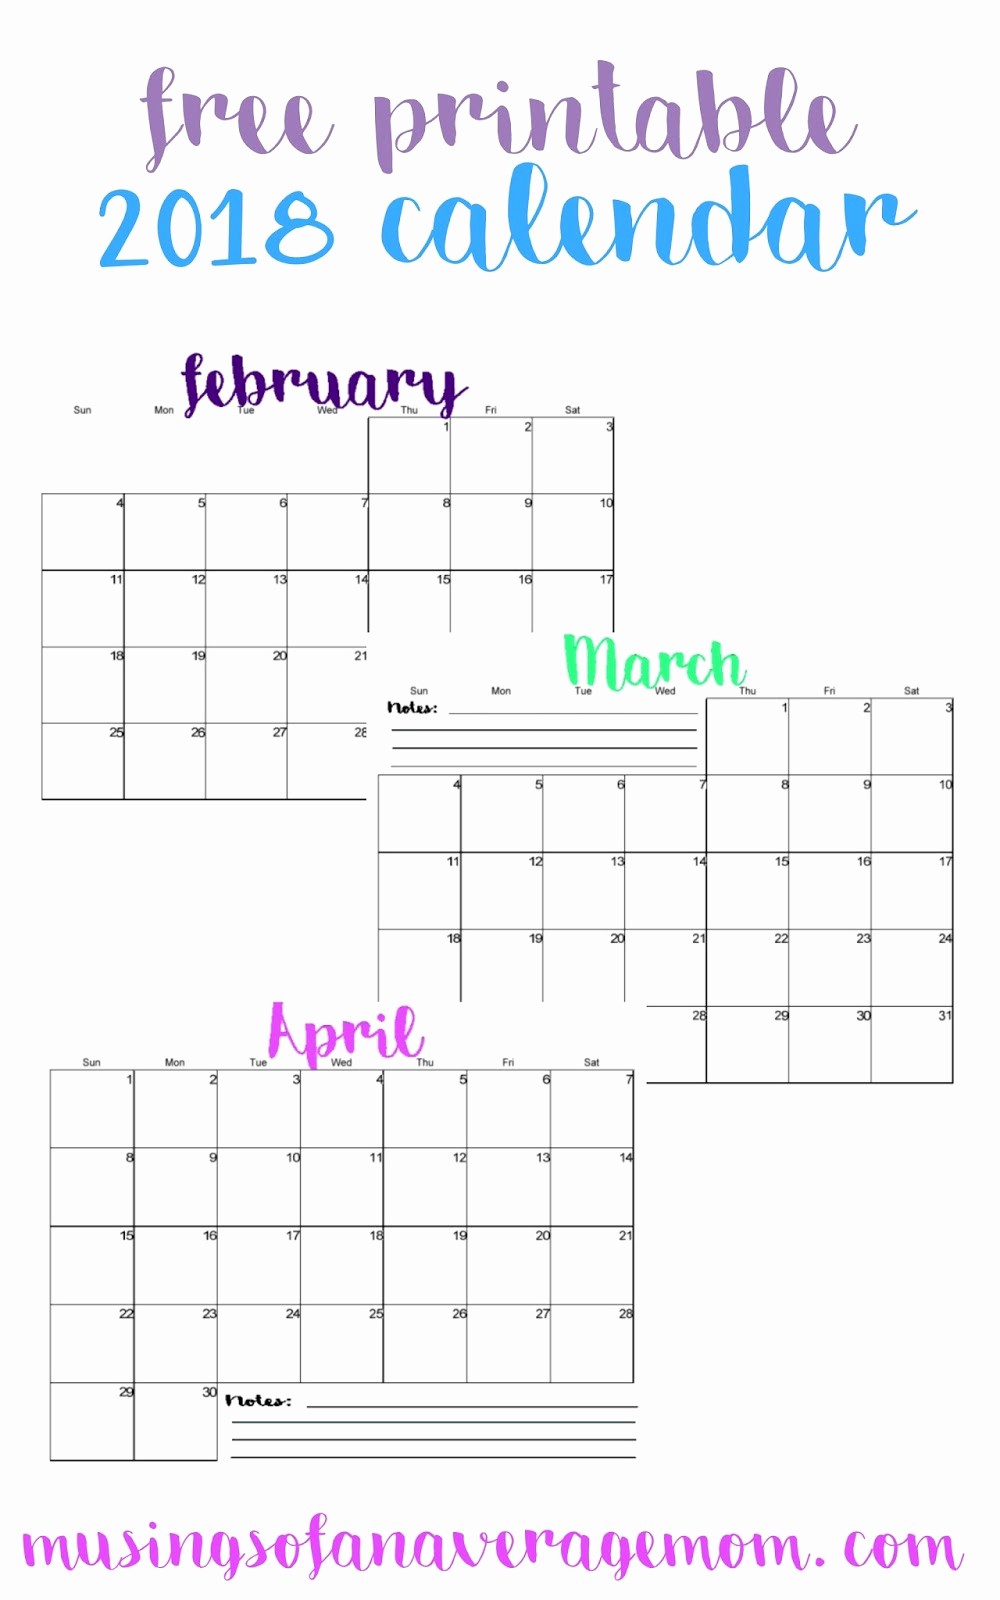 Free Printable Daily Calendar 2018 Fresh Musings Of An Average Mom 2018 Horizontal Calendars